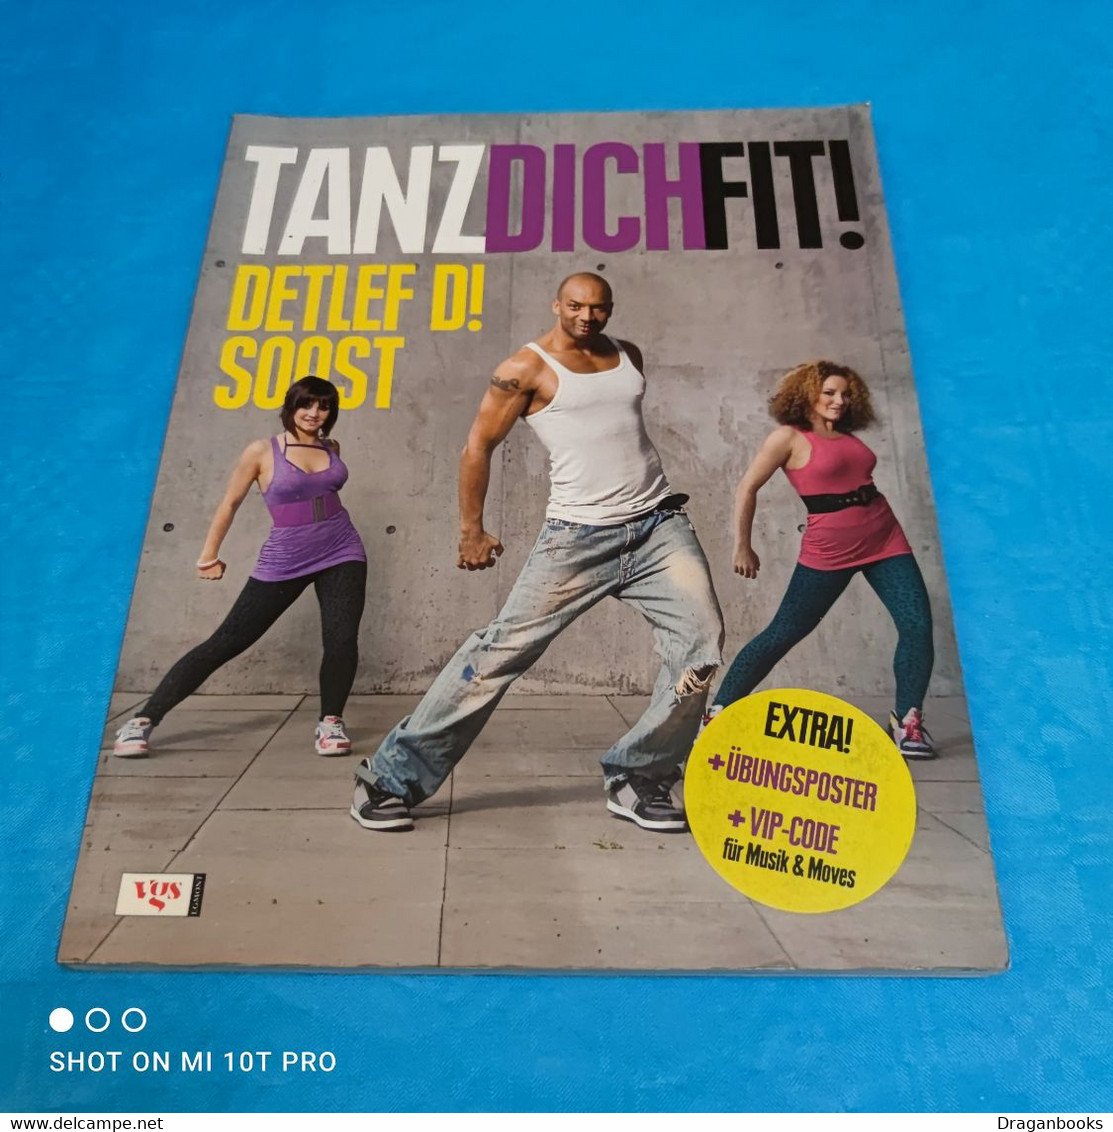 Detlef Di Soost - Tanz Dich Fit - Sports